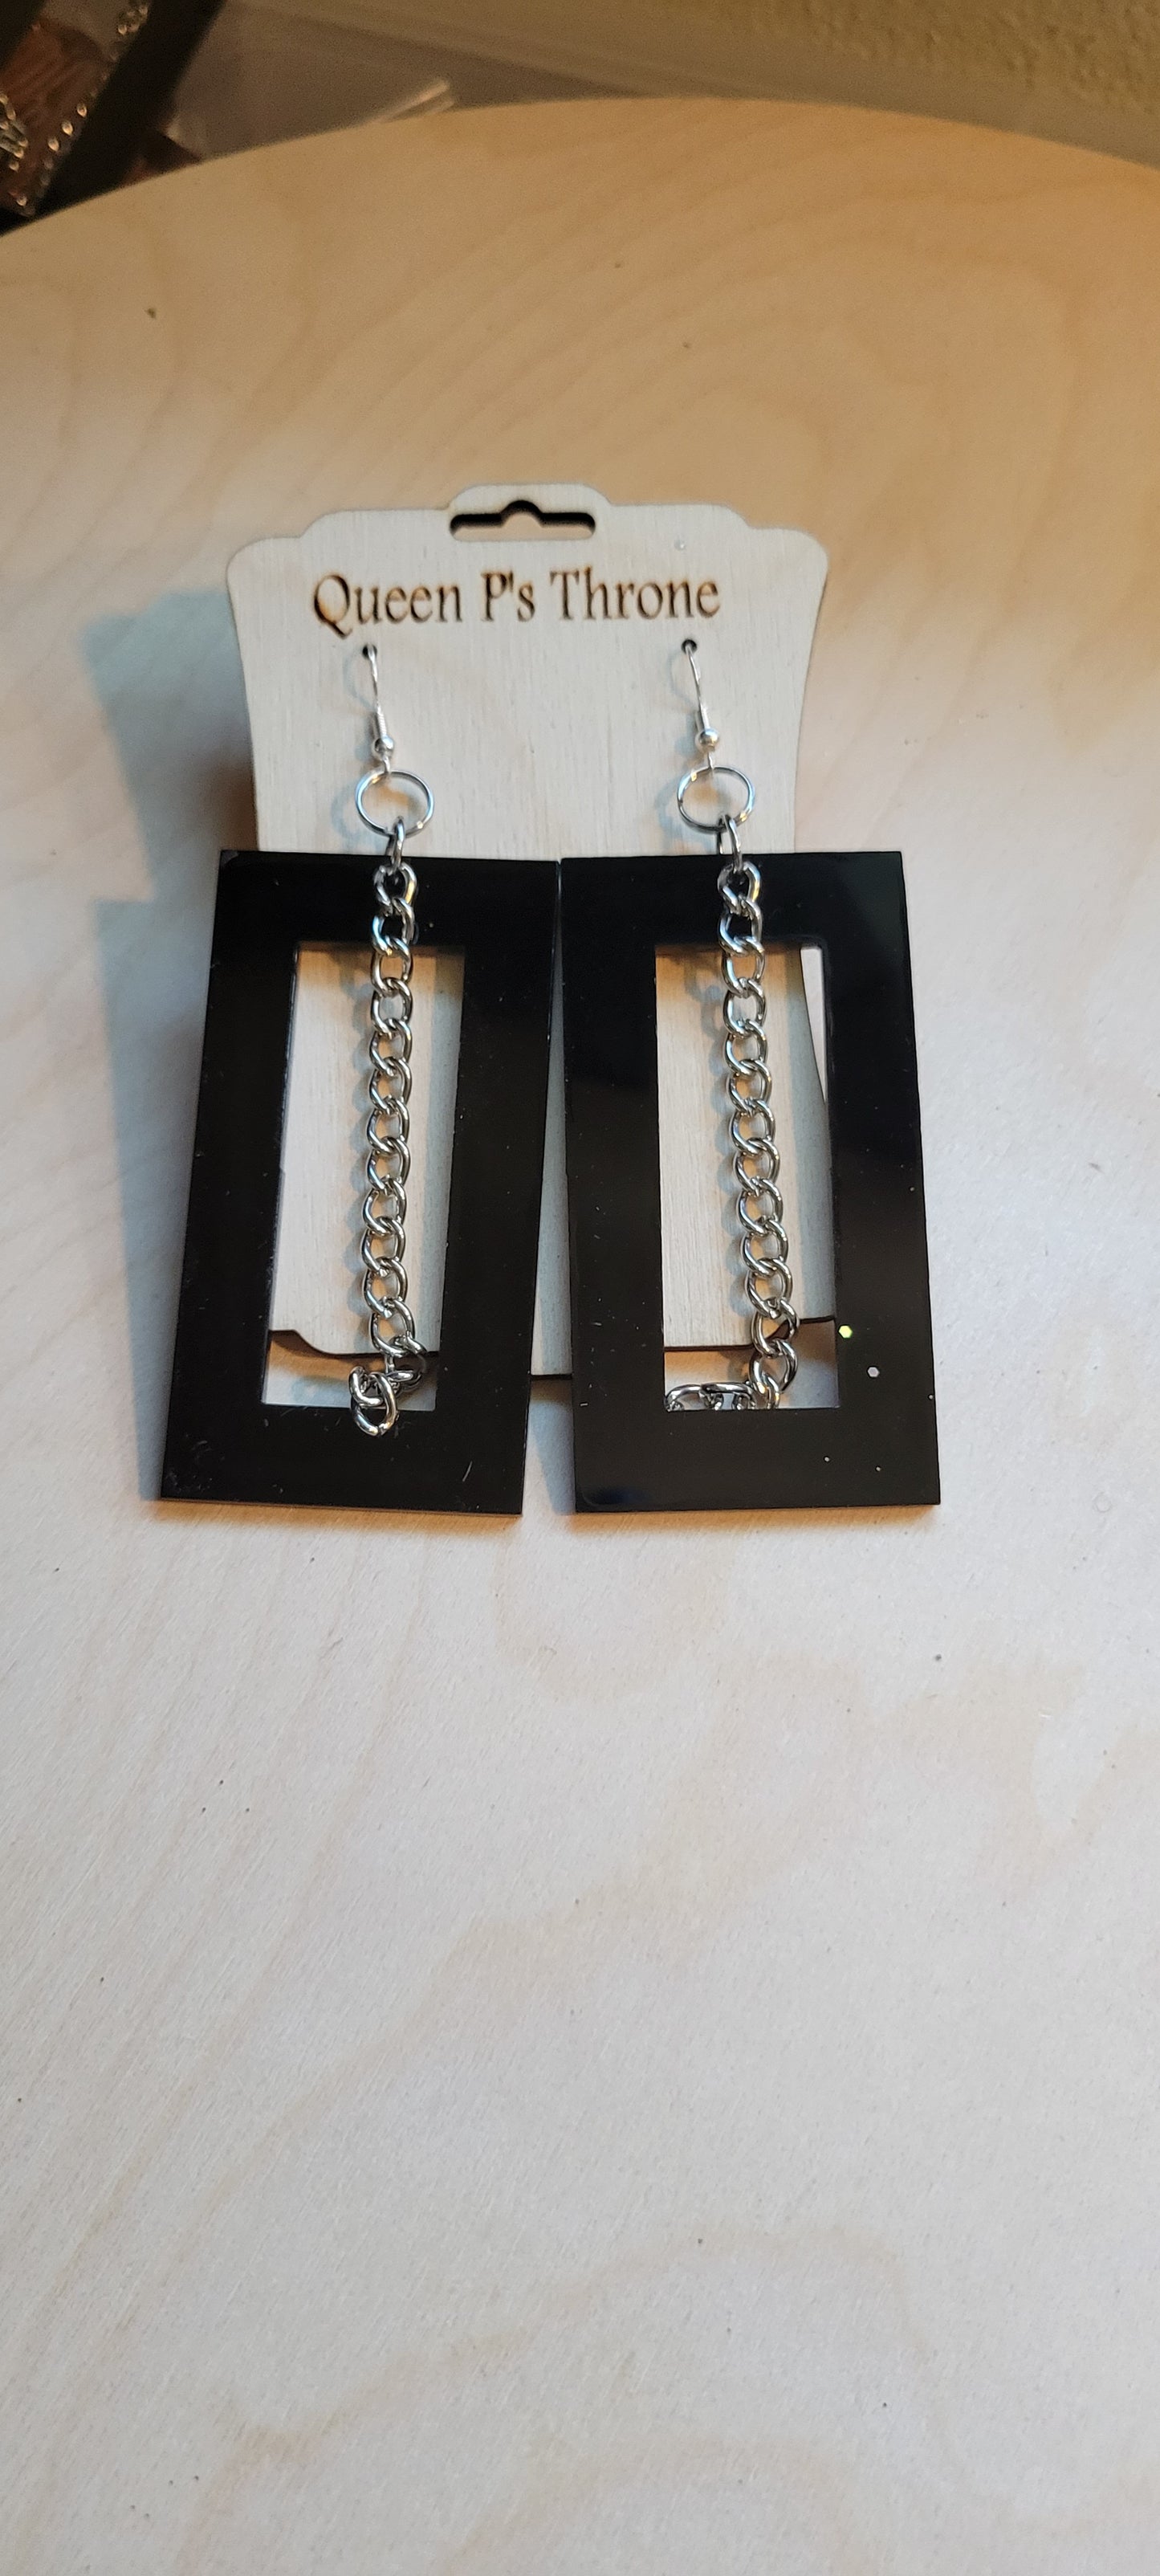 Acrylic and chain earrings